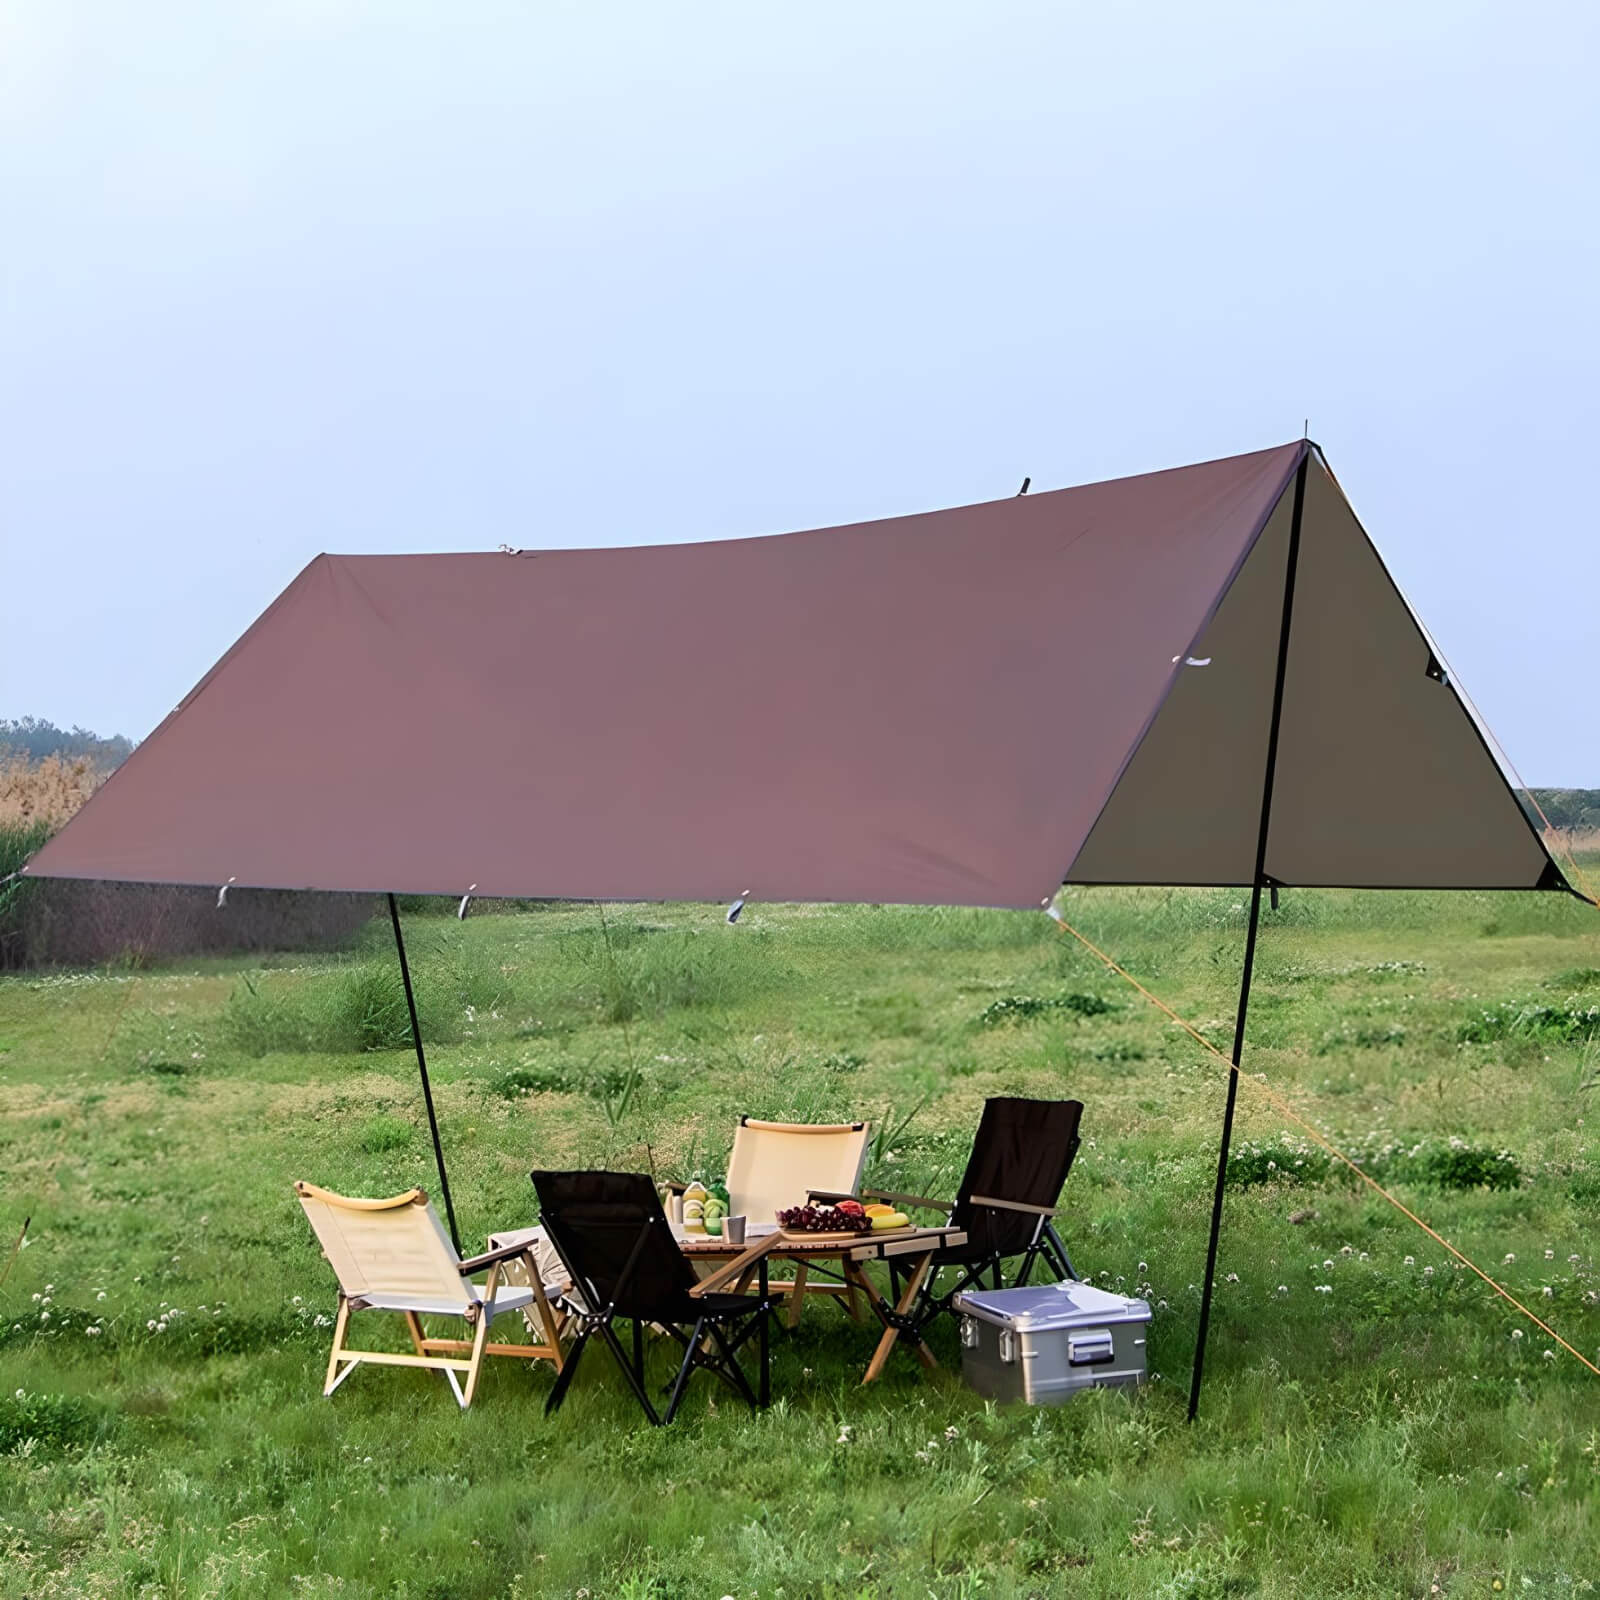 rainfly-tent-tarp-at-field-image